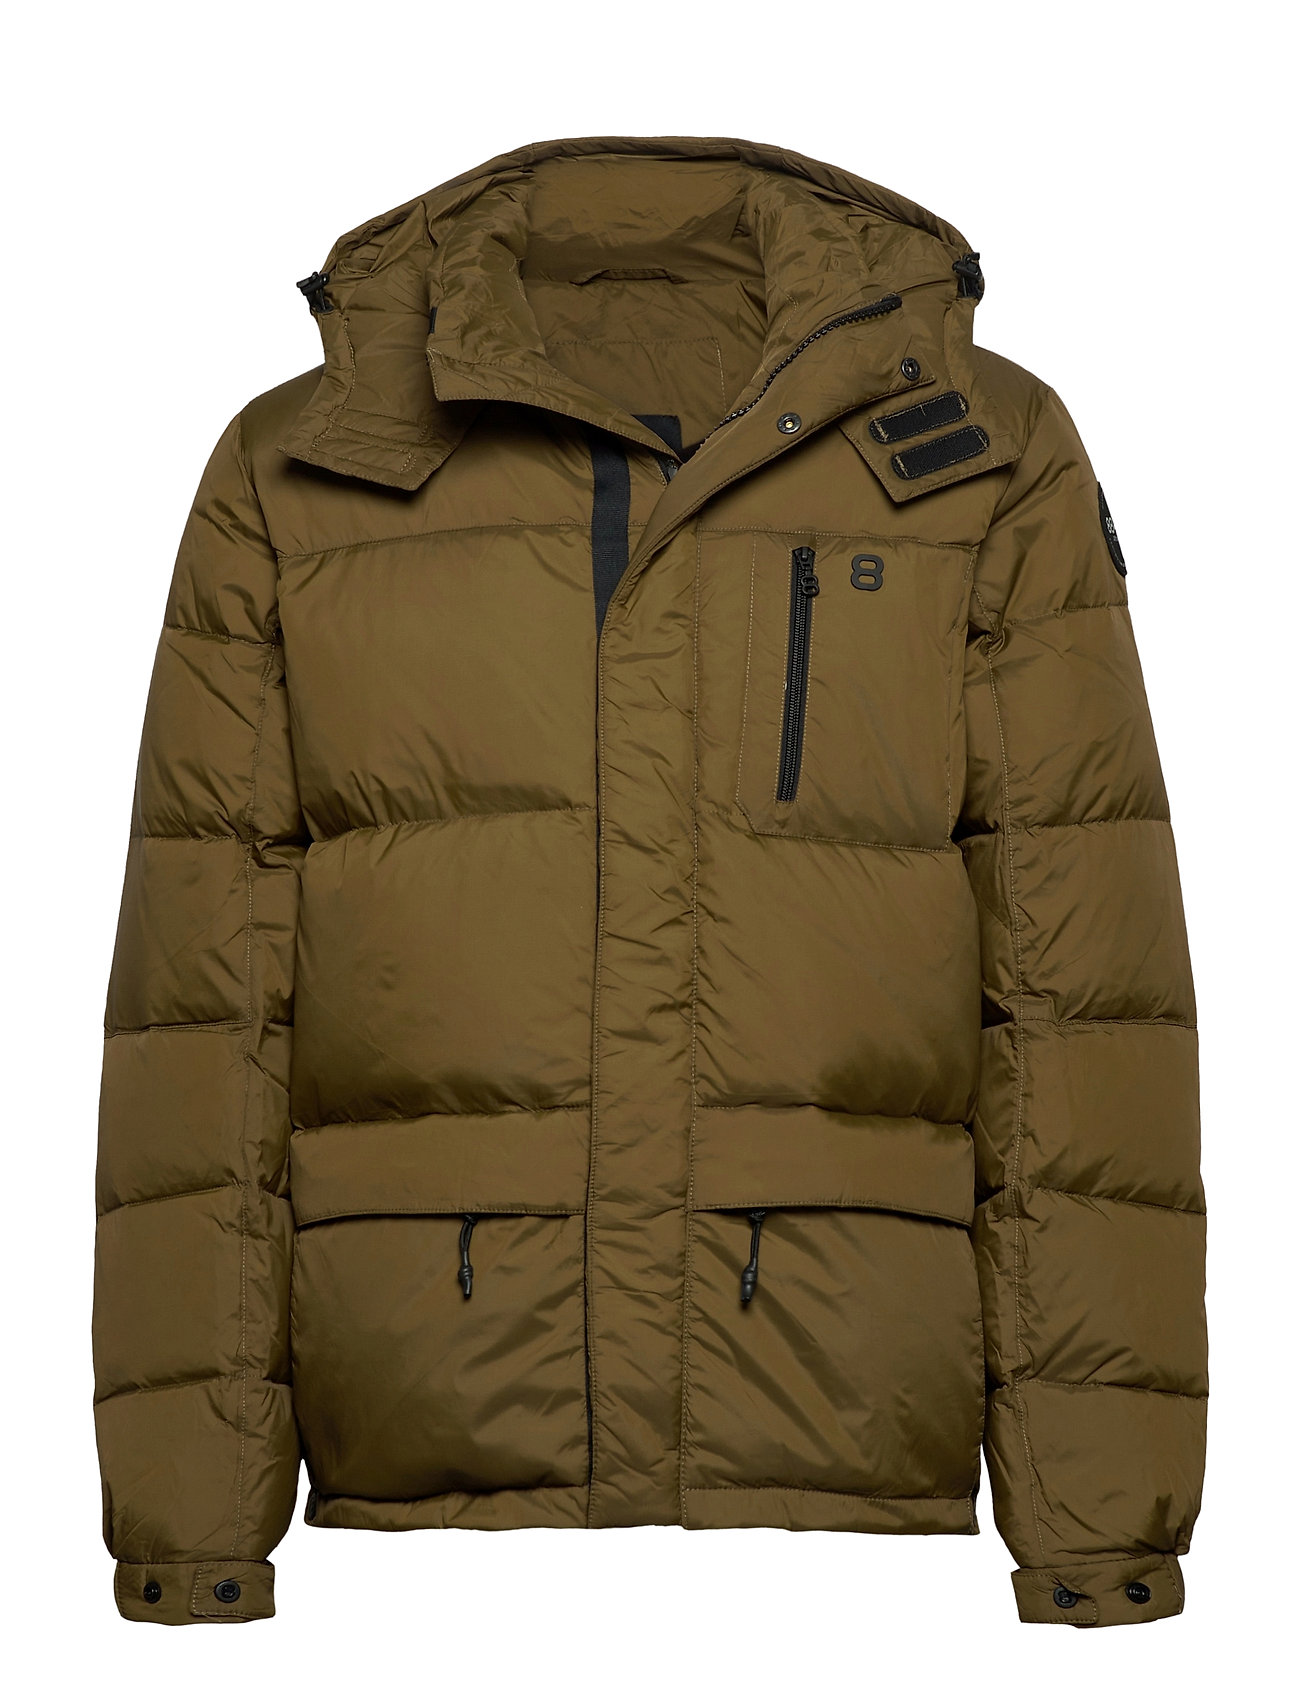 Frenkel Jacket Outerwear Sport Jackets Vihreä 8848 Altitude